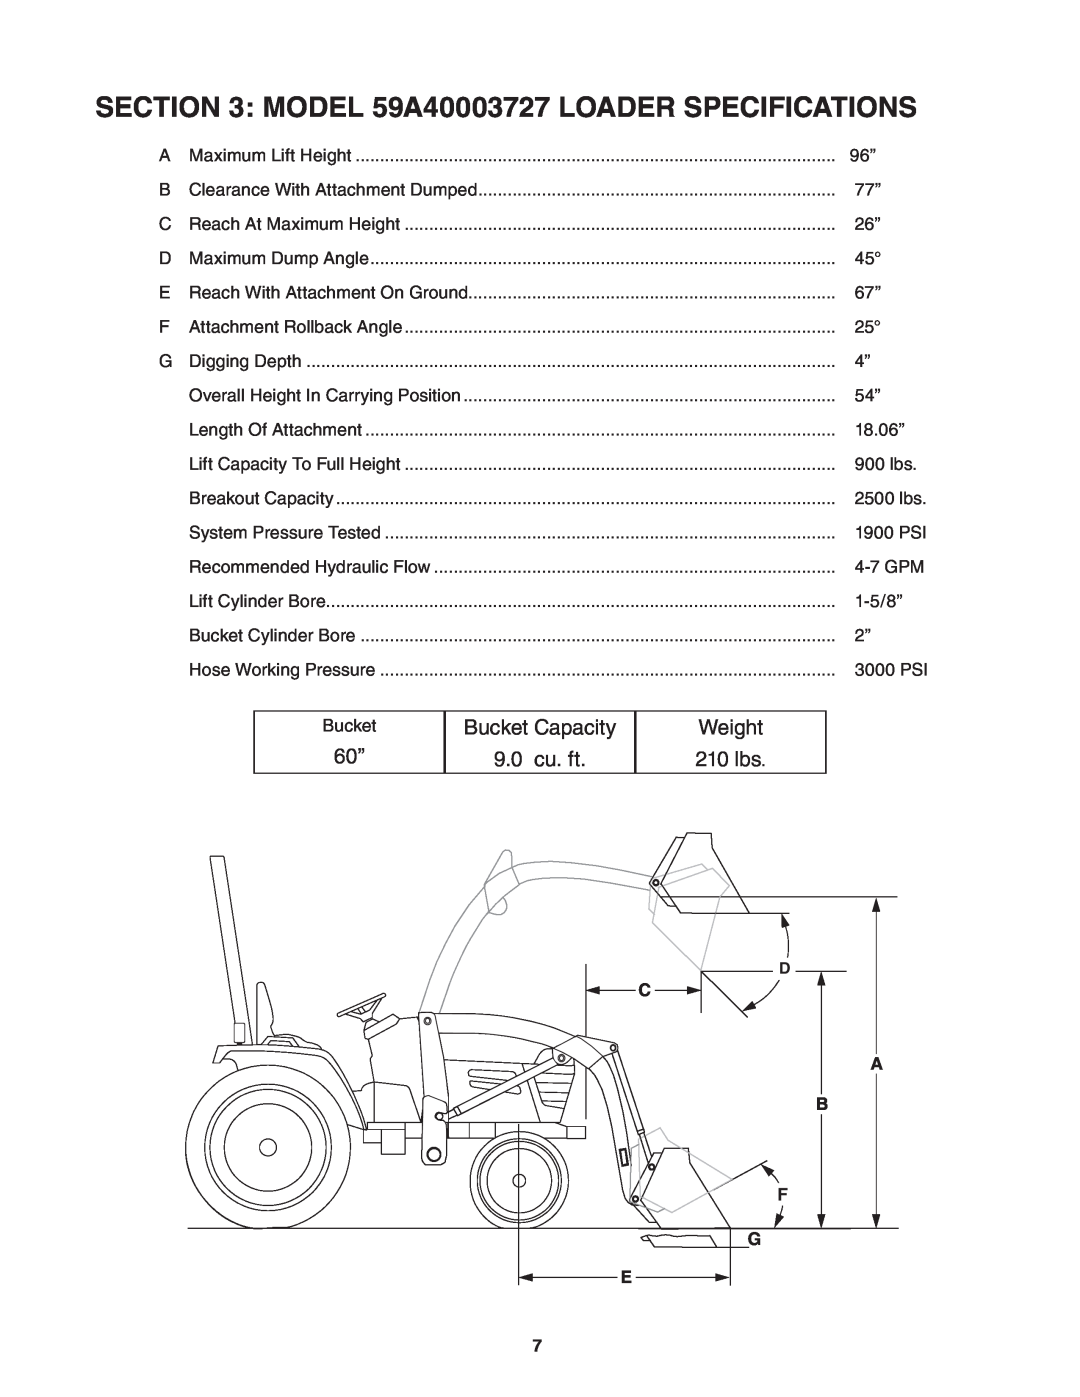 Cub Cadet manual model 59A40003727 loader specifications, Bucket Capacity, 9.0 cu. ft, Weight, 210 lbs 